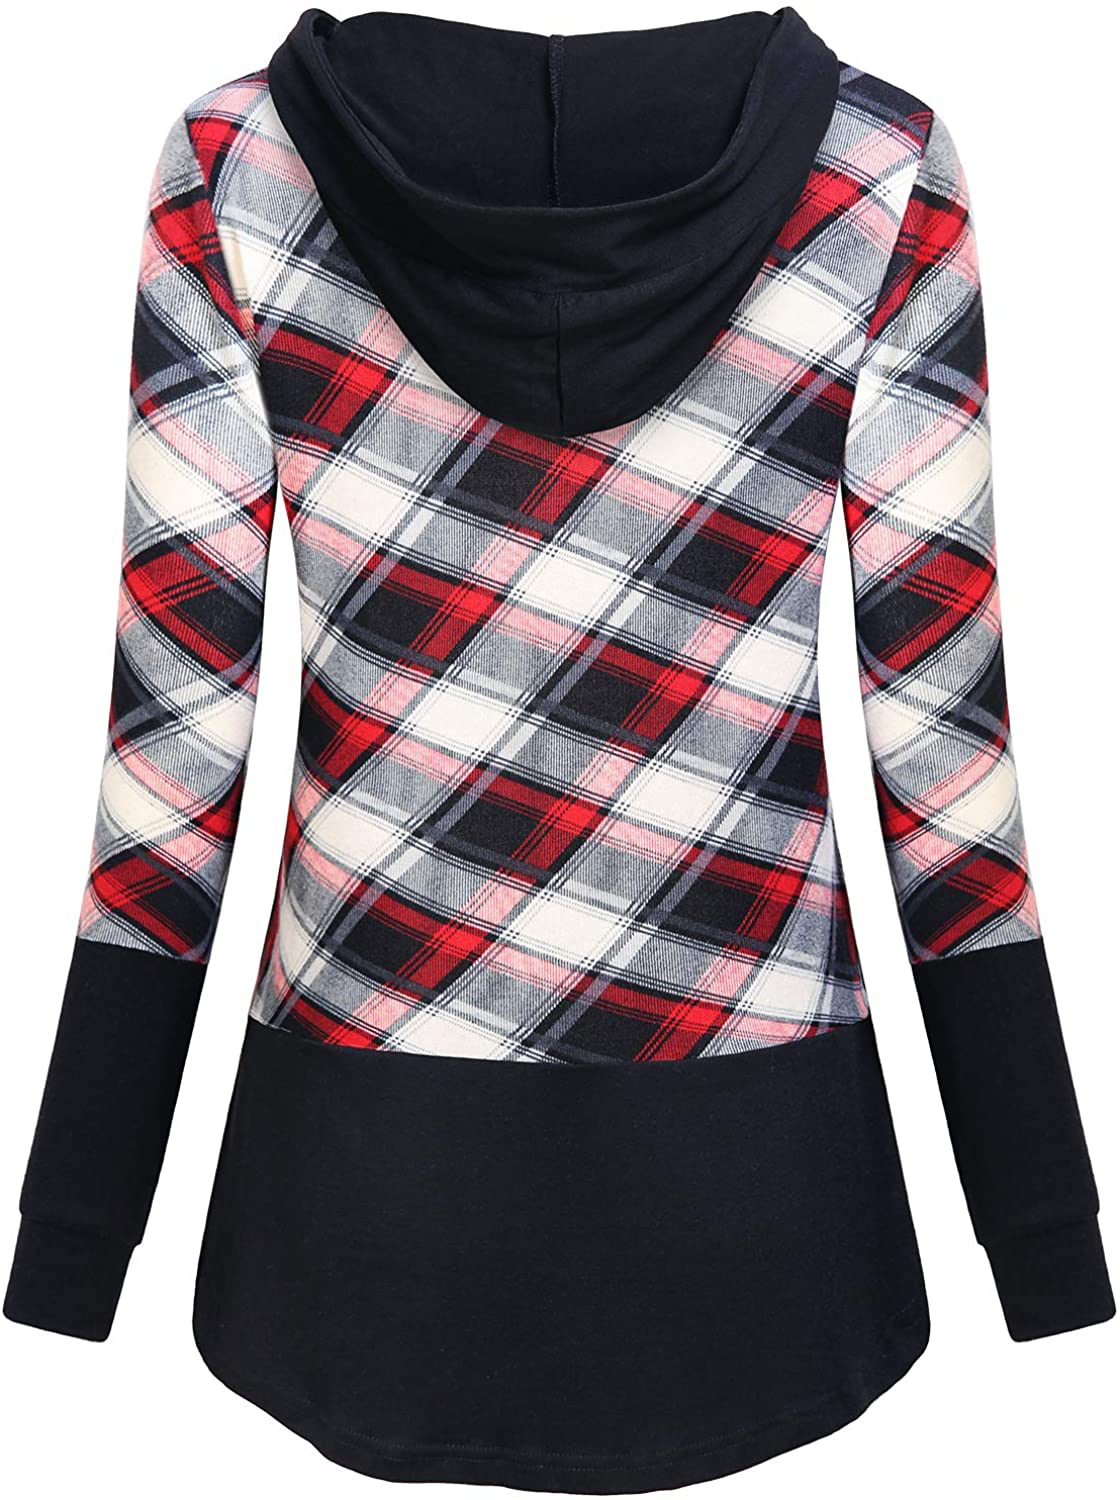 AxByCzD Womens Plaid Sweatshirt Long Sleeve Color Block Hoodies with Kangaroo Pocket